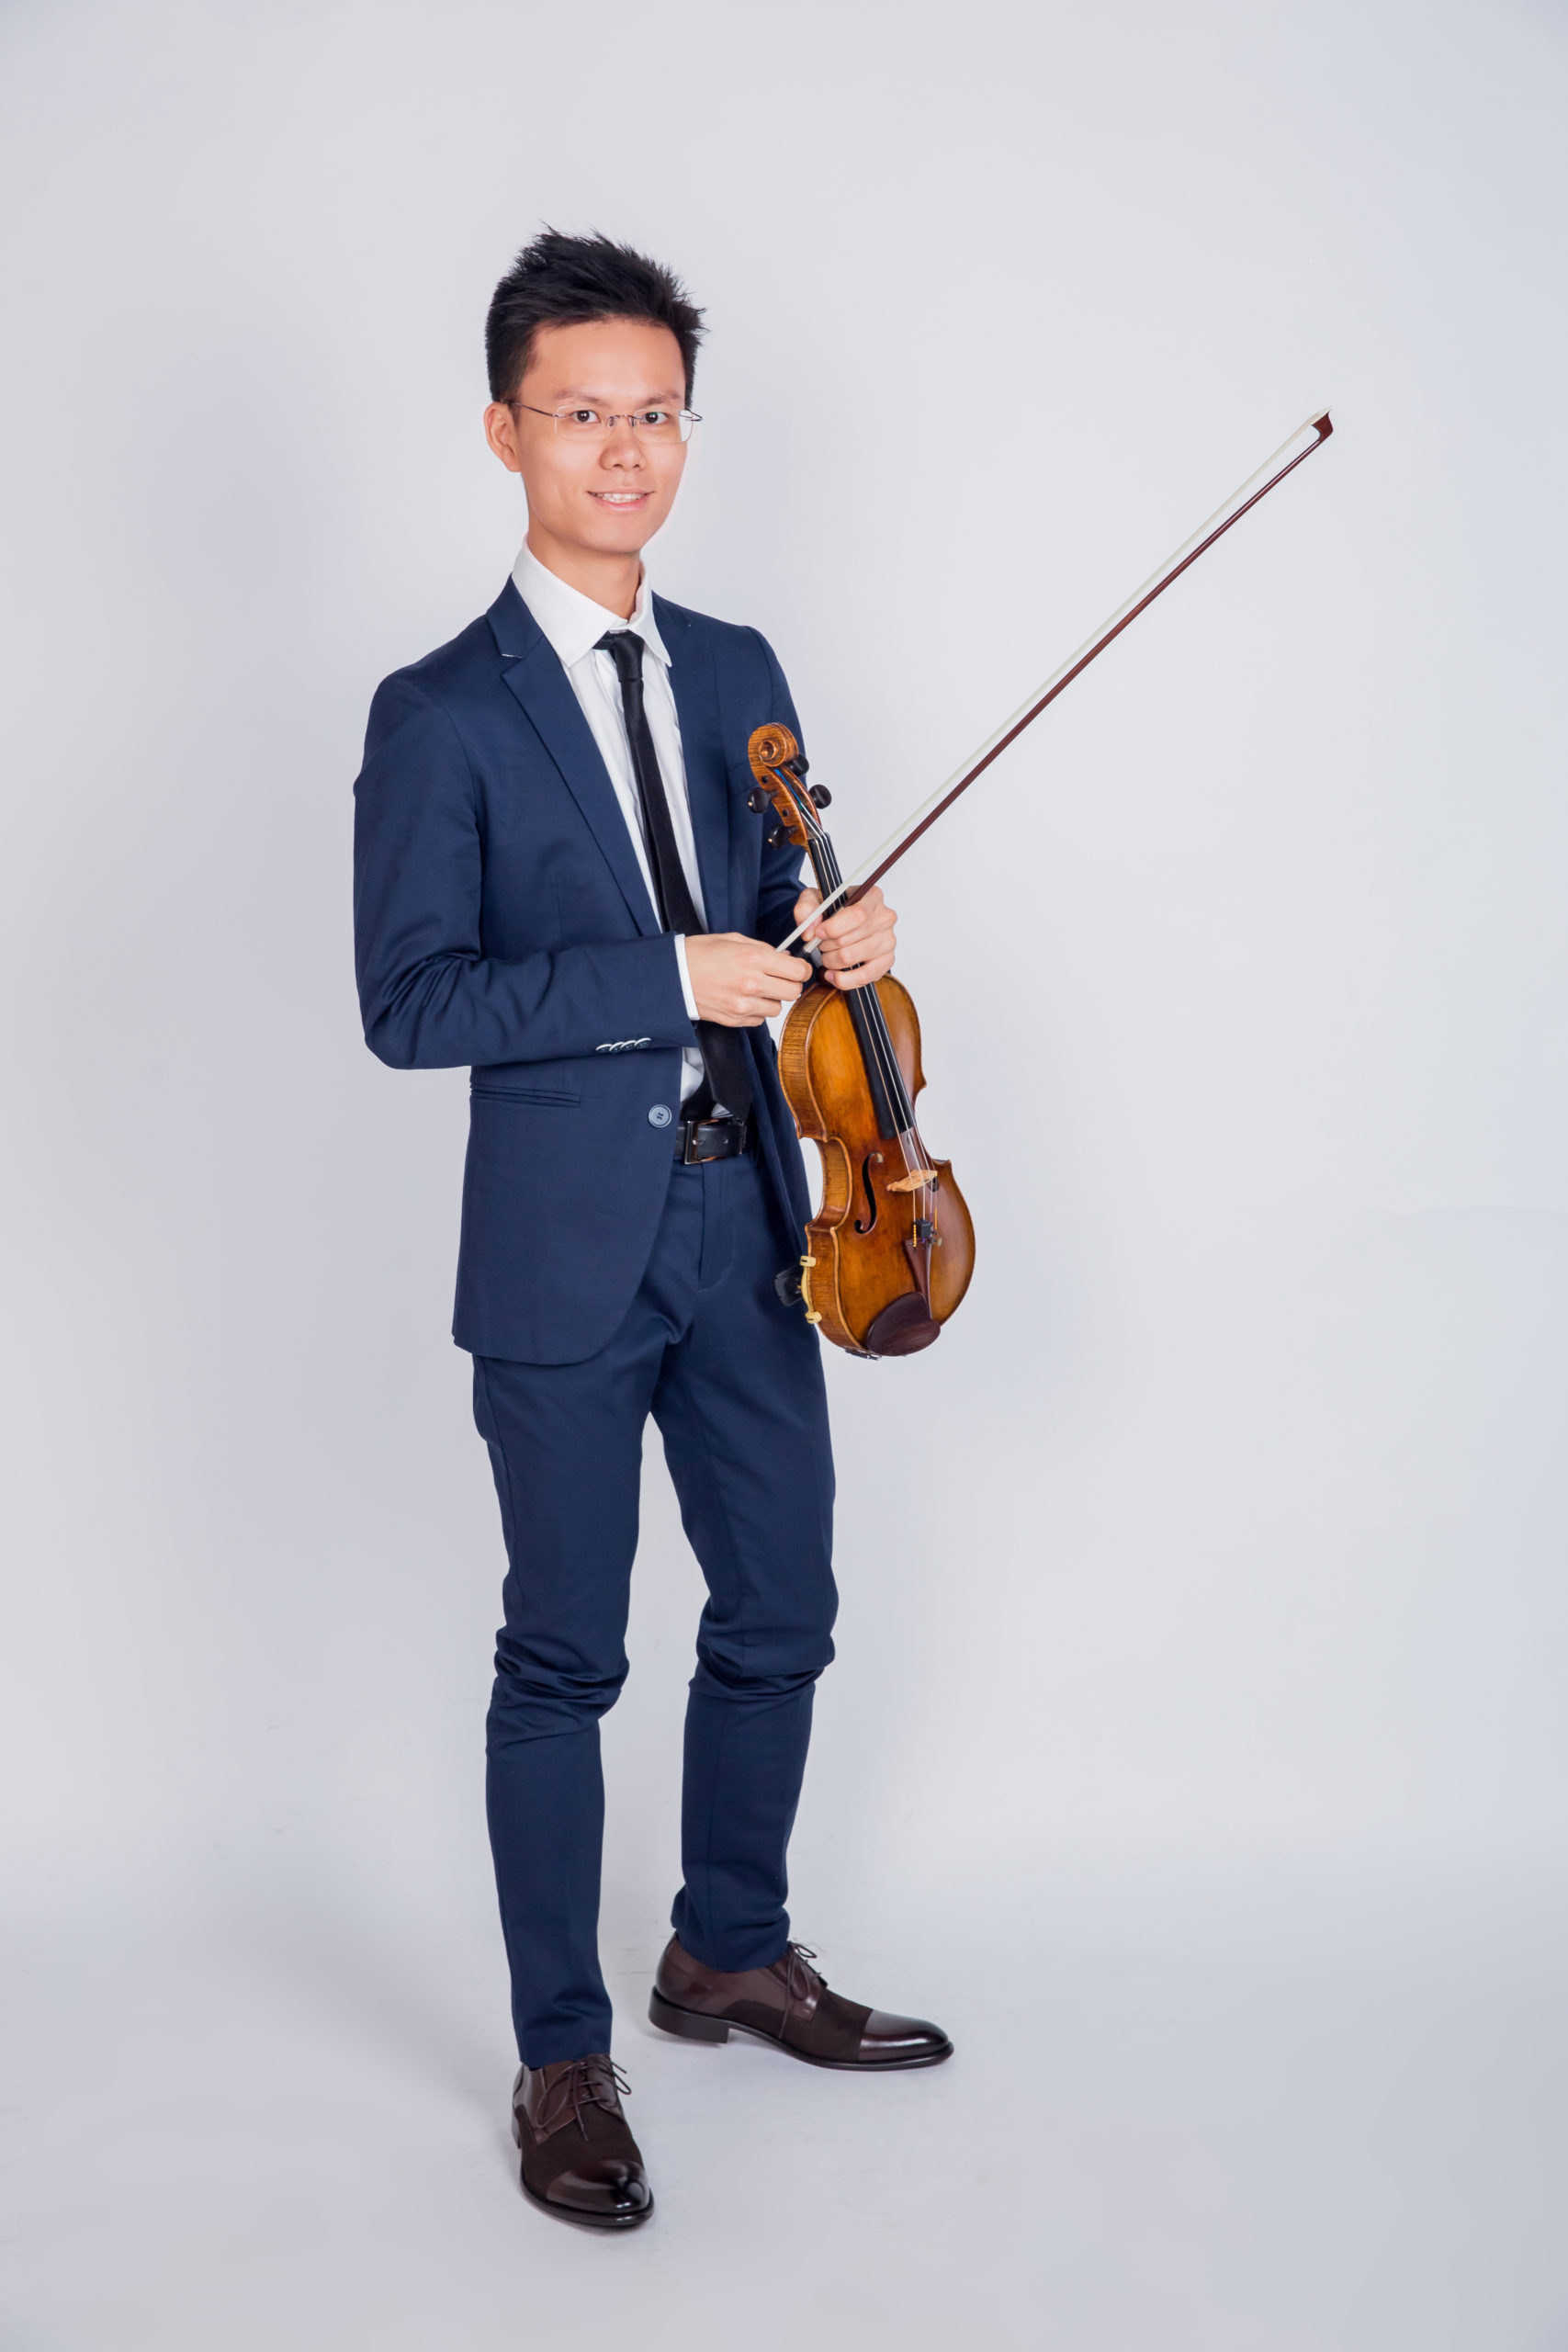 Image of Chi Li holding violin